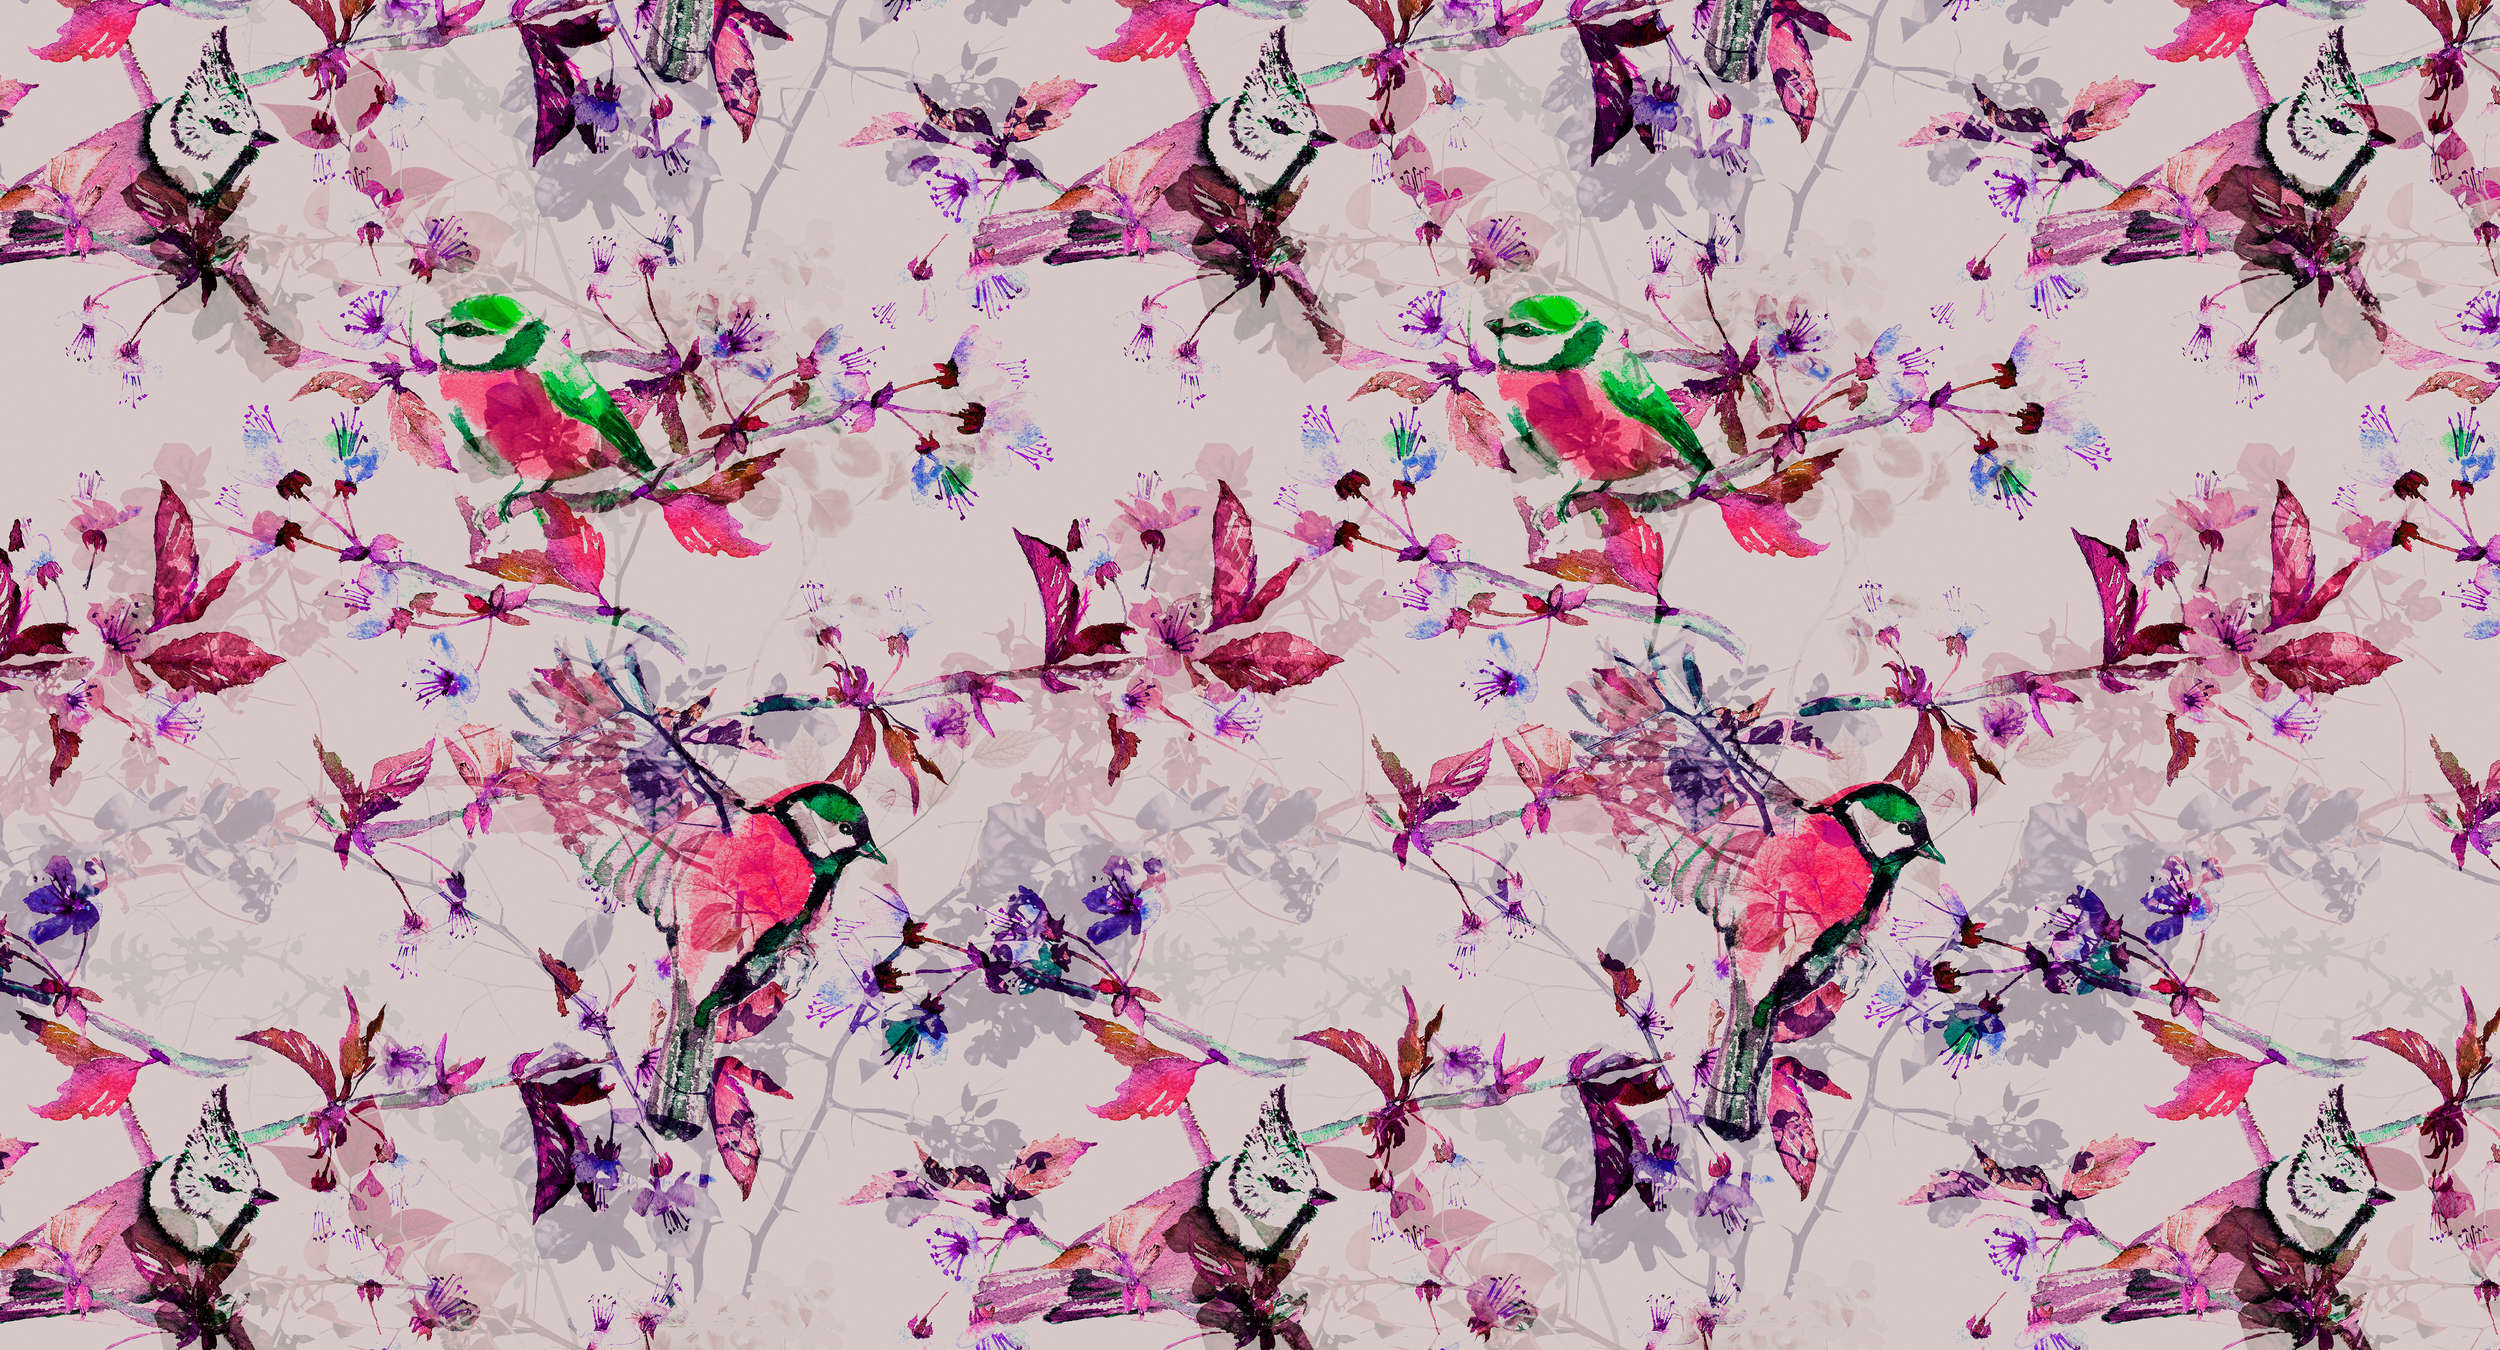             Vogels Collage Stijl Behang - Roze, Blauw
        